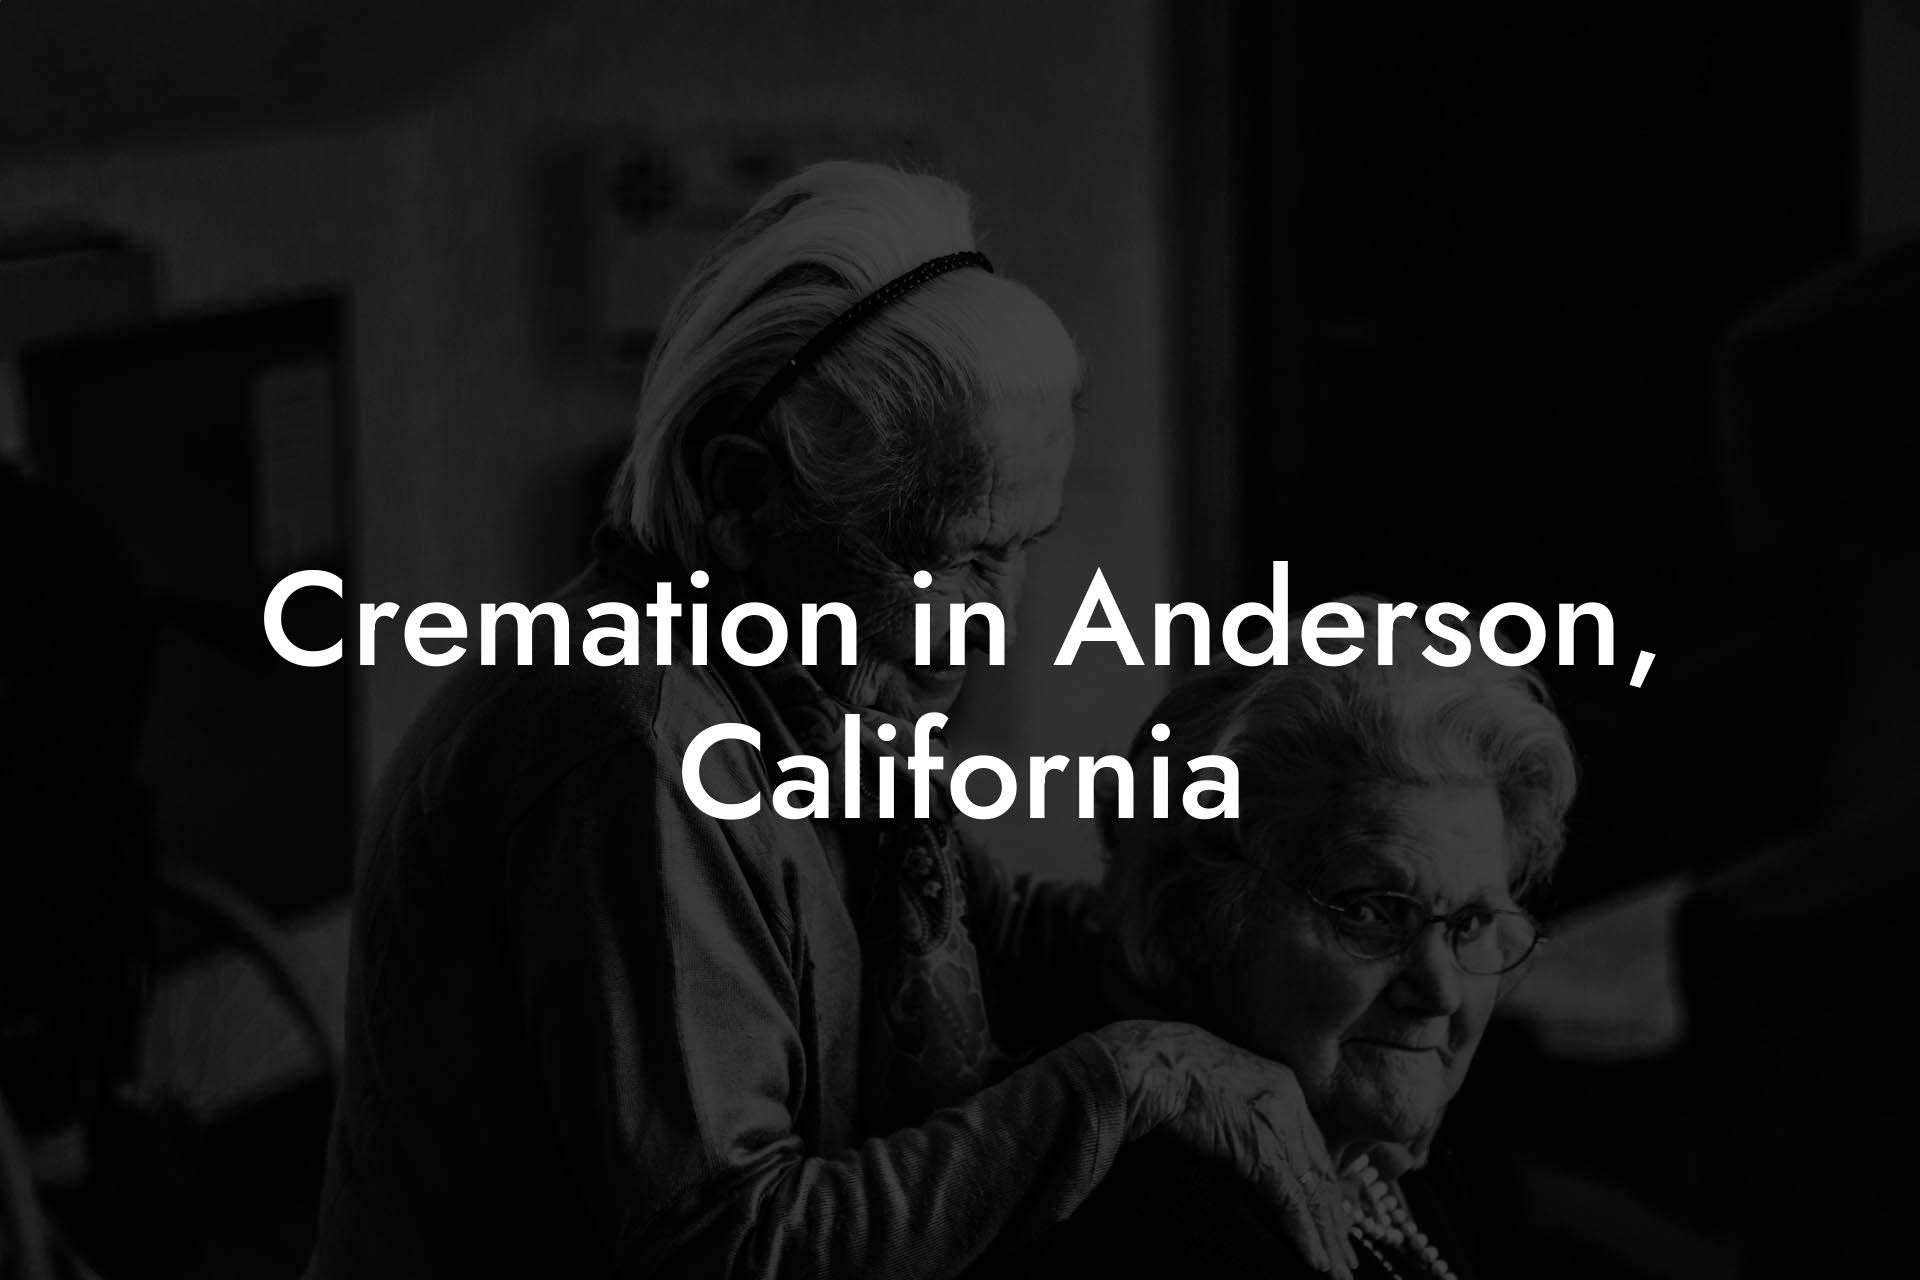 Cremation in Anderson, California